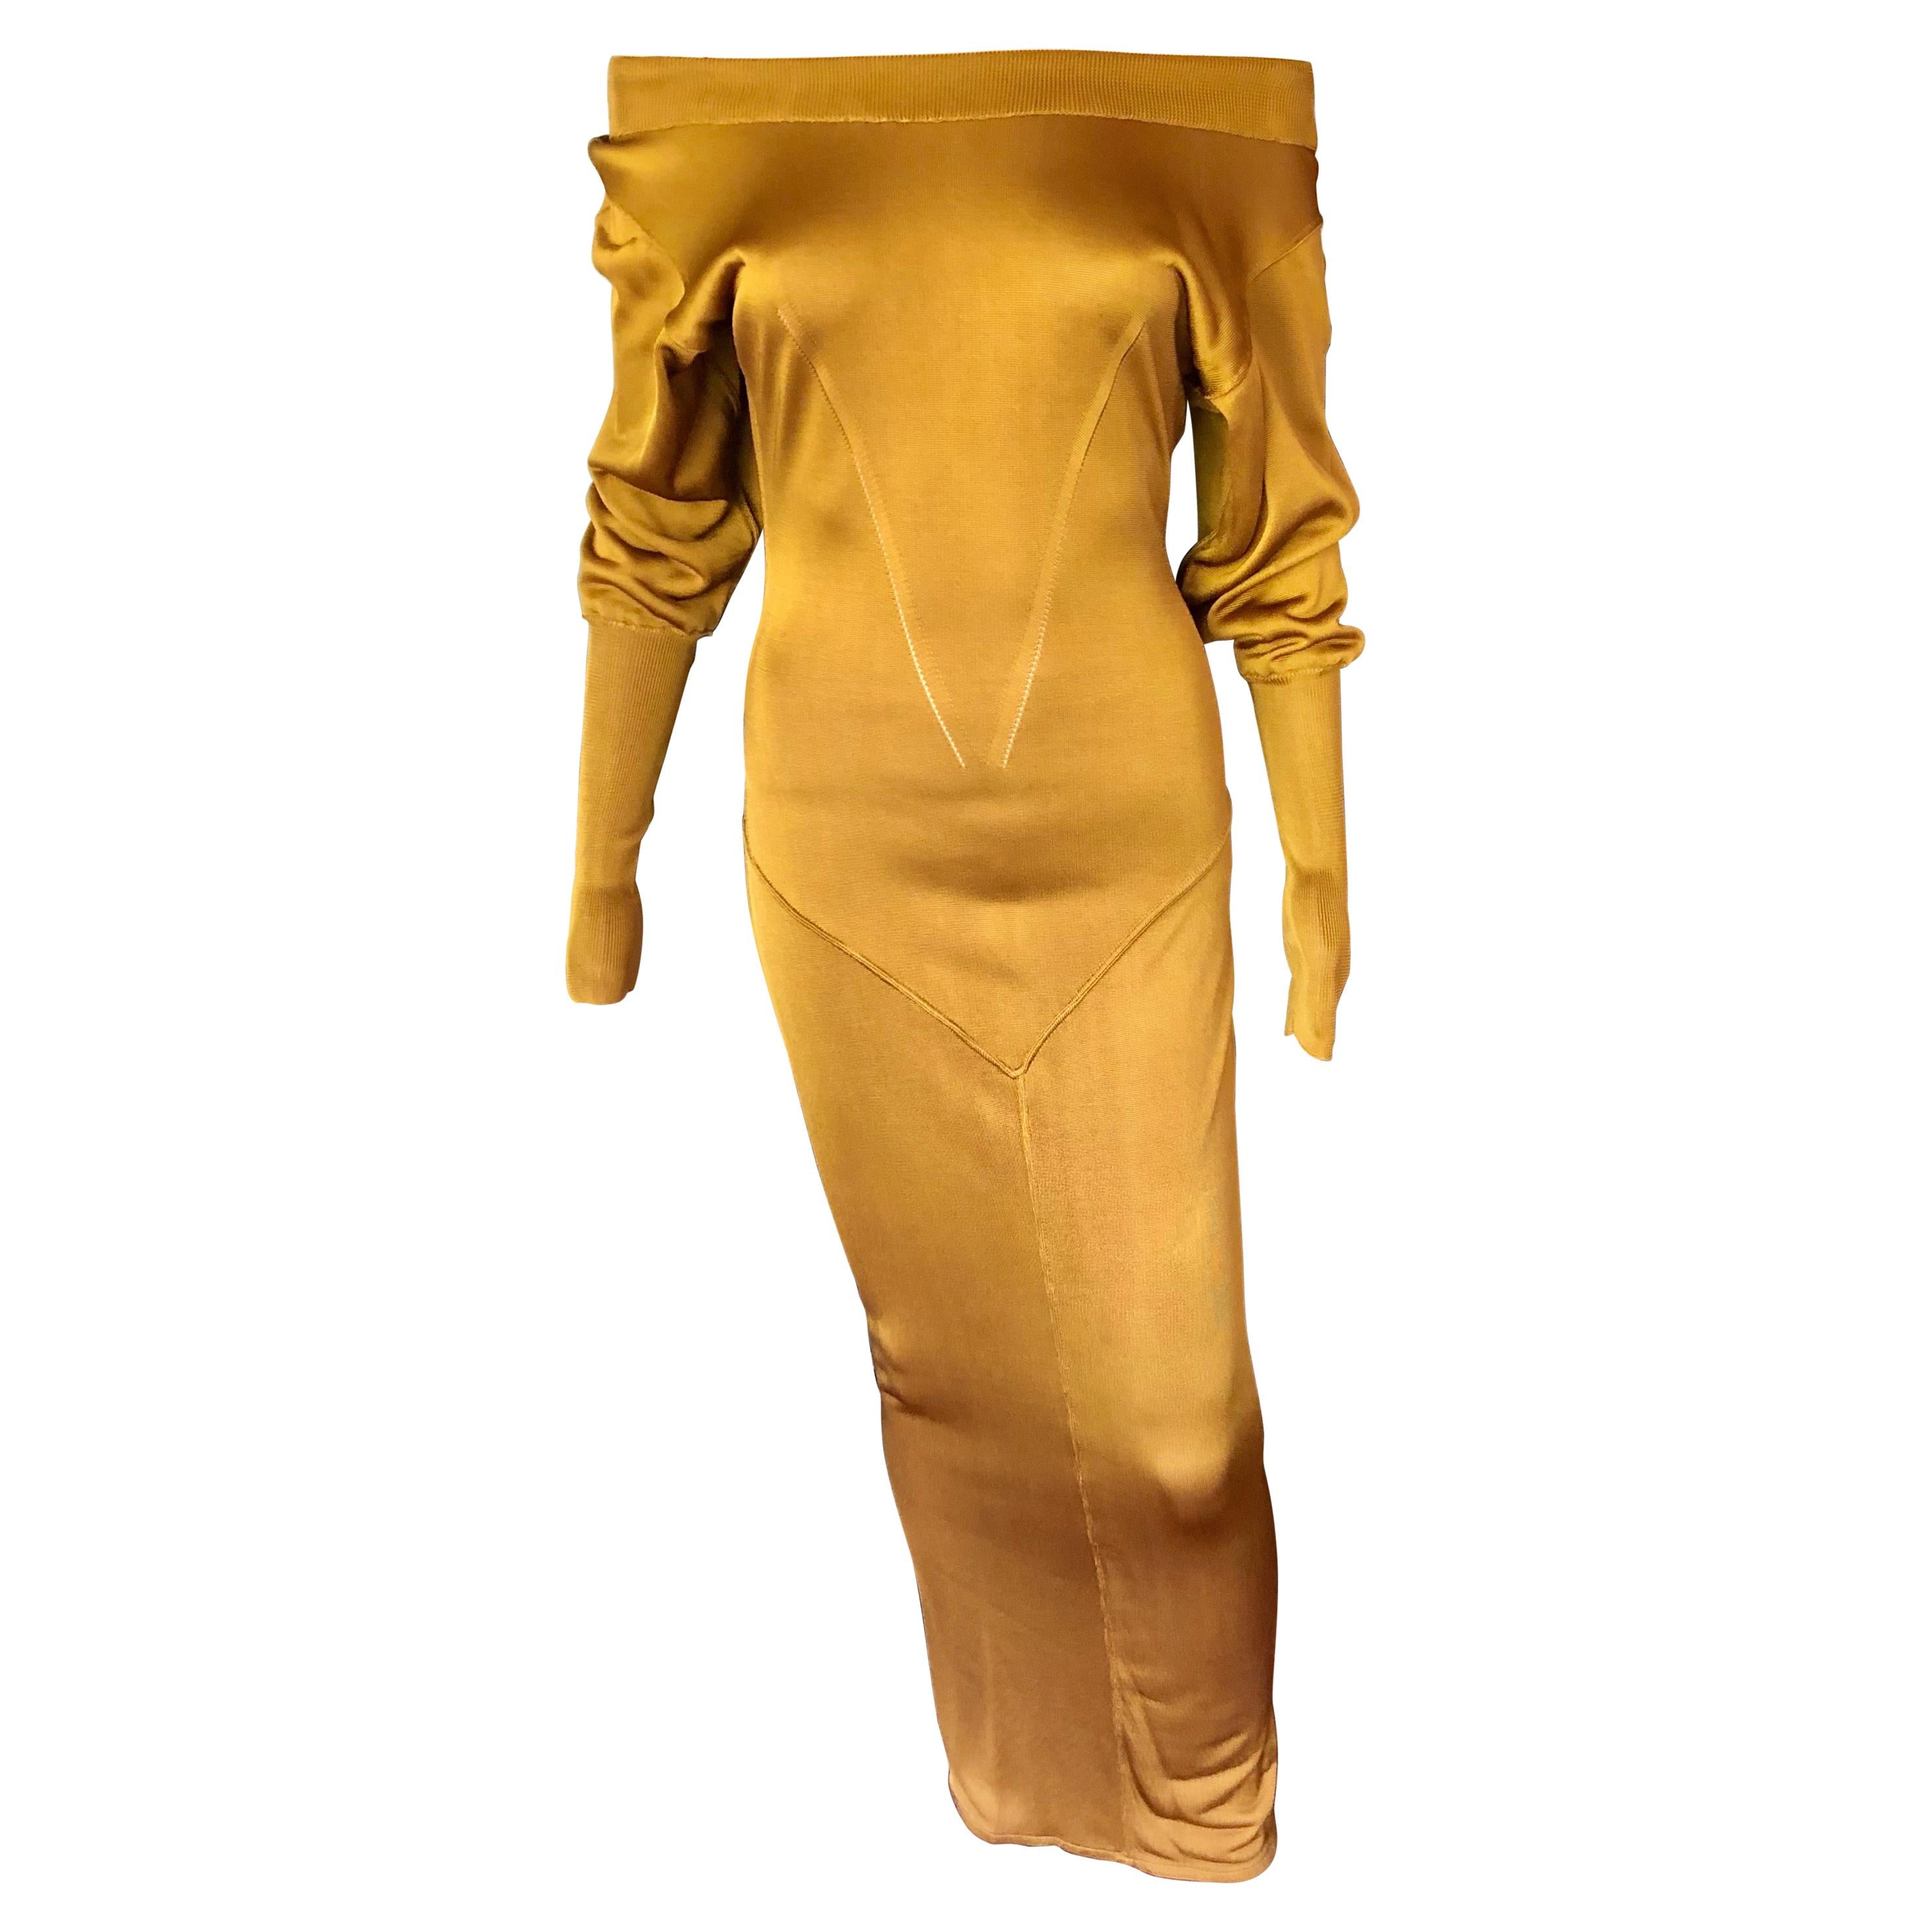 Azzedine Alaïa c. 1990's Vintage Semi-Sheer Gown Maxi Dress For Sale